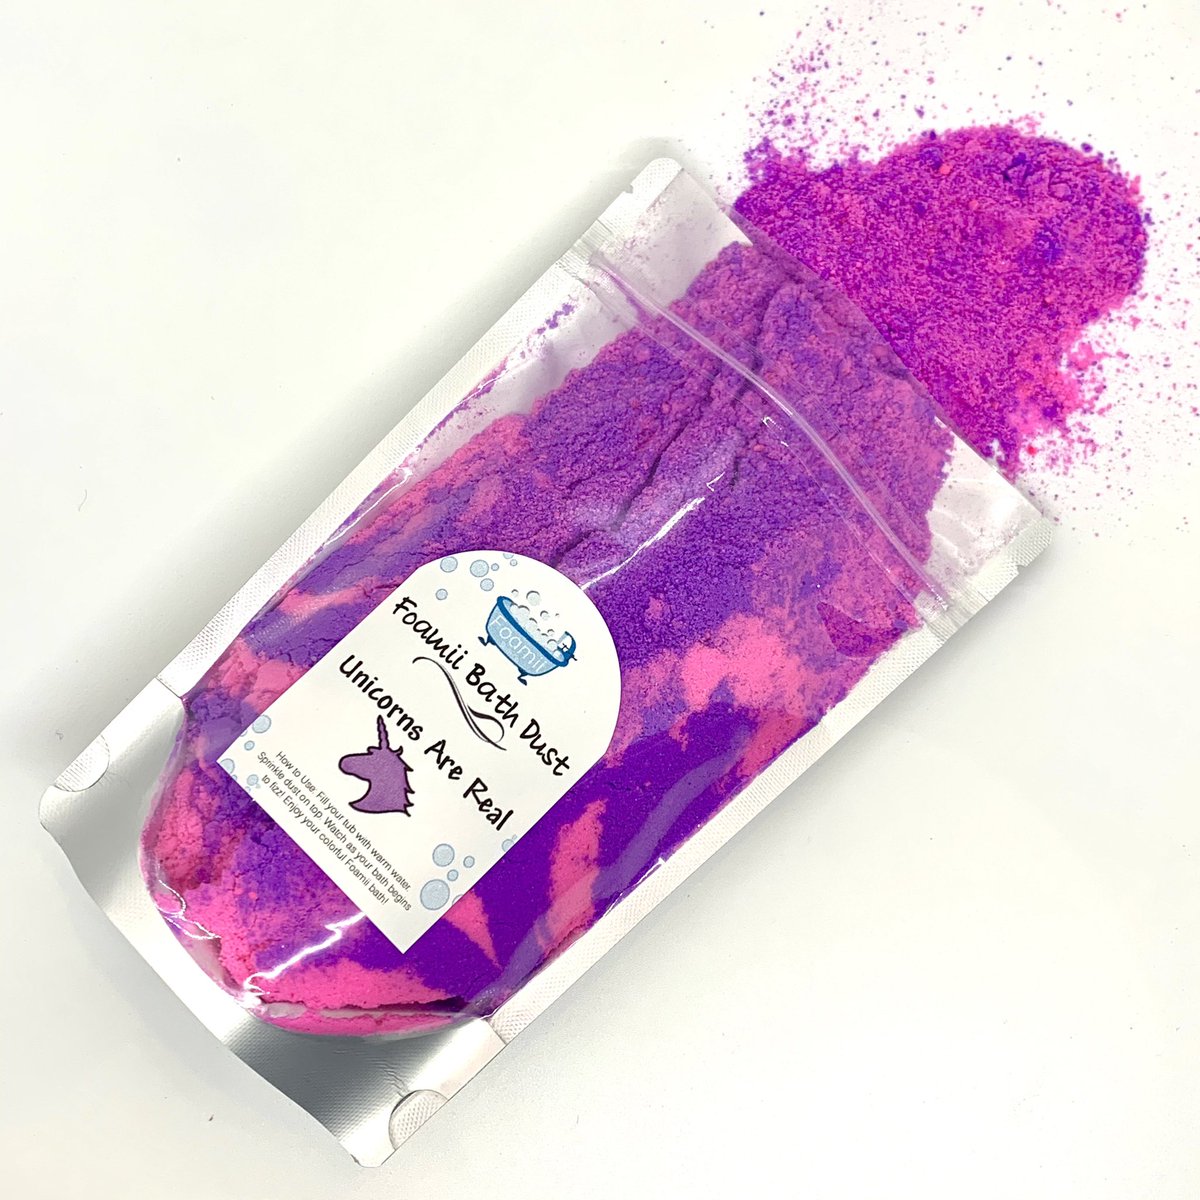 Say hello to Unicorns Are Real bath dust!

This product creates a purple and pink foamy experience in your bathtub! Only $4 a bag!💜💖

#foamii #selfecarebatth #bathbombdust #bathpowder #fizzybathpowder #foamybathdust #bathbombpowder #unicornsarereal #magical #unicornmagic